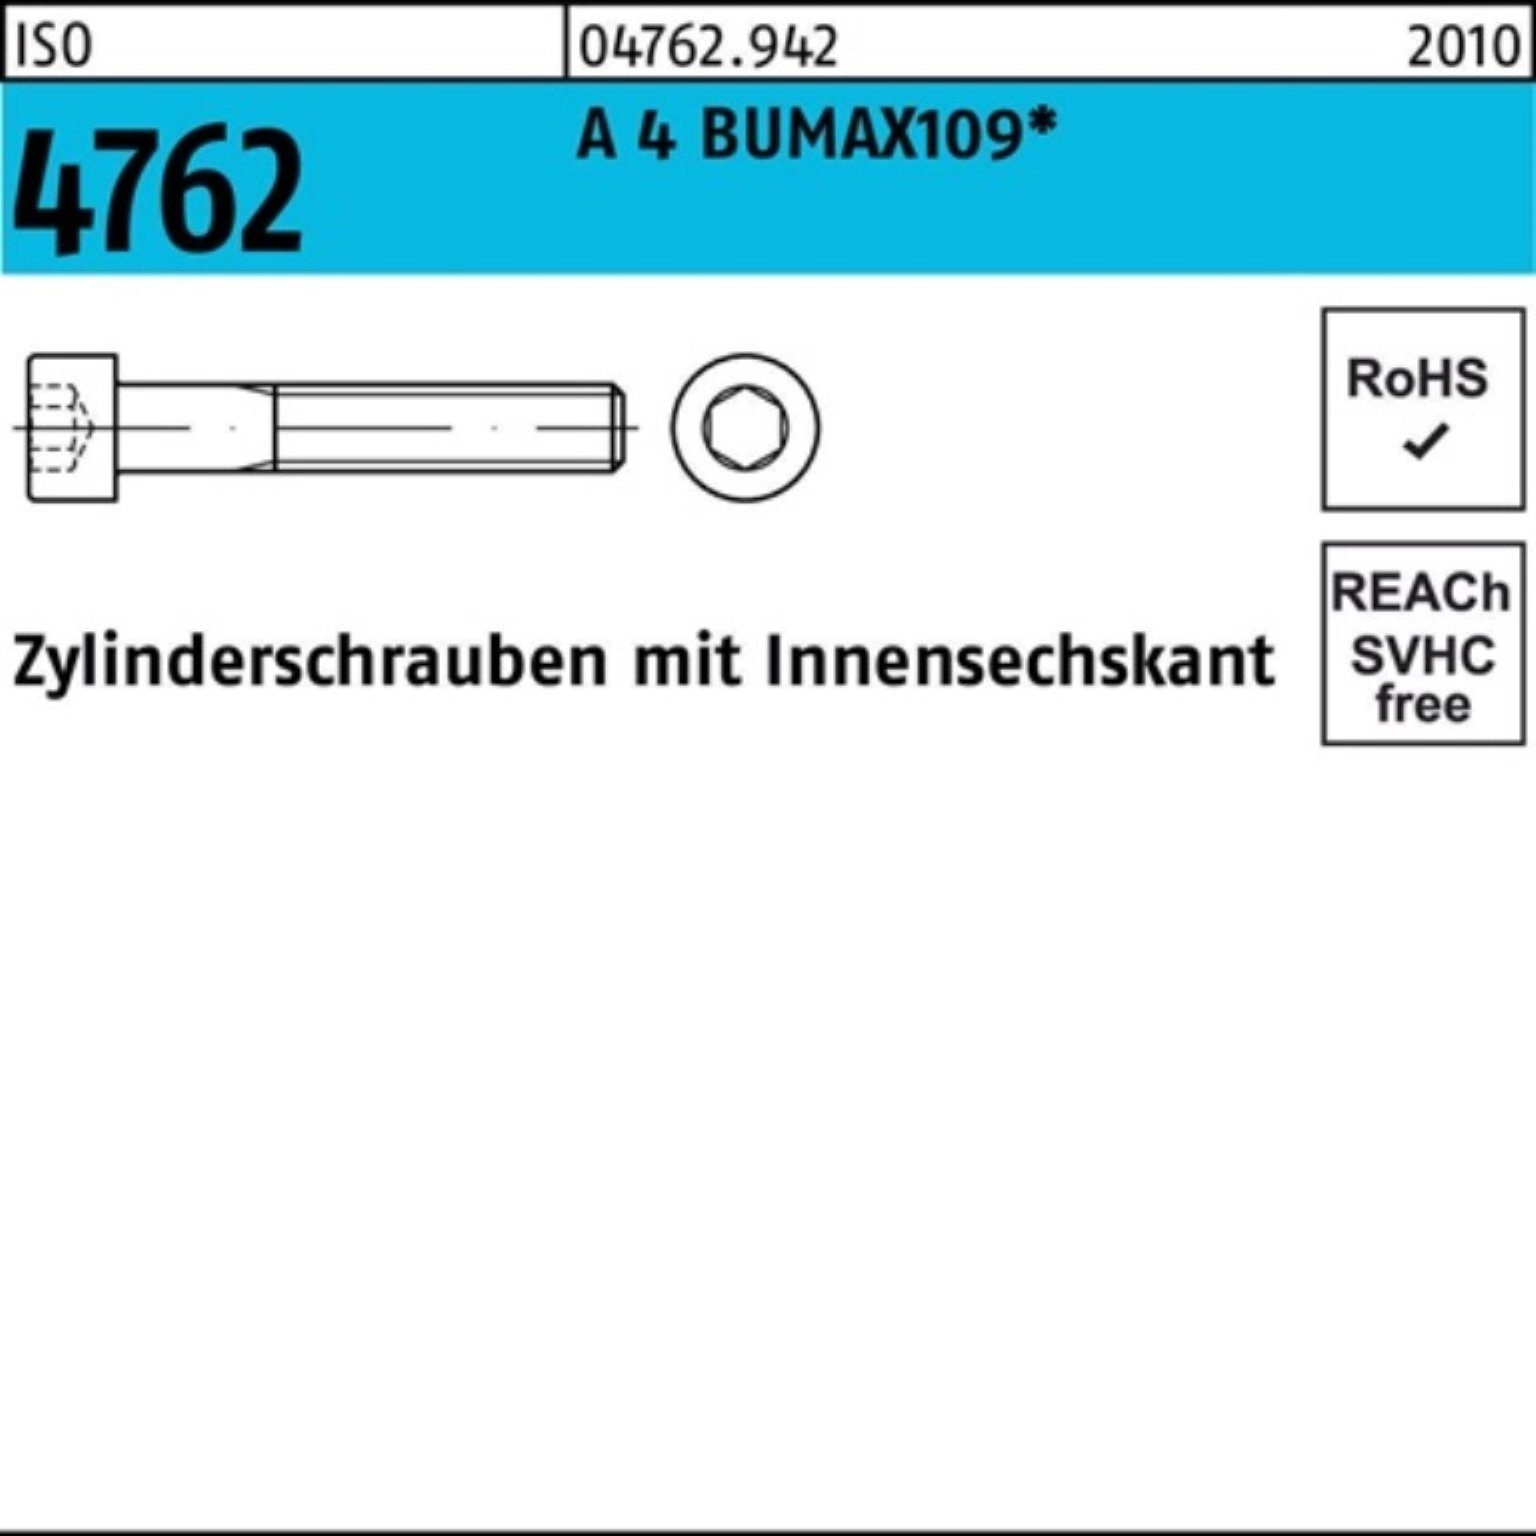 Bufab Zylinderschraube 100er Pack Zylinderschraube ISO 4762 Innen-6kt M6x 50 A 4 BUMAX109 100